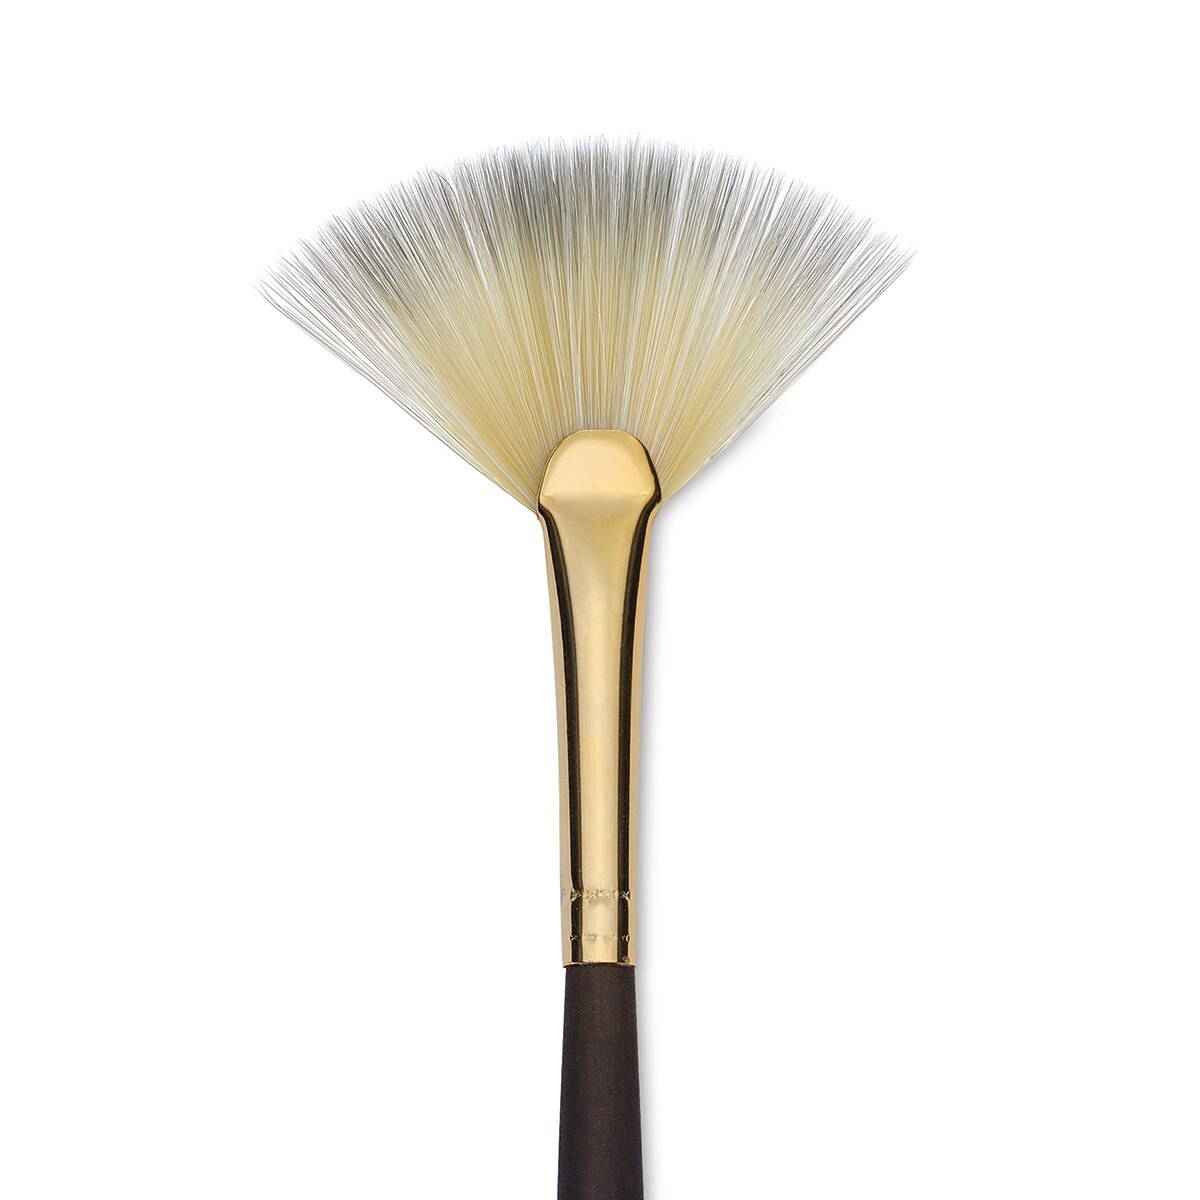 Princeton Umbria Brush - Fan, Long Handle, Size 3